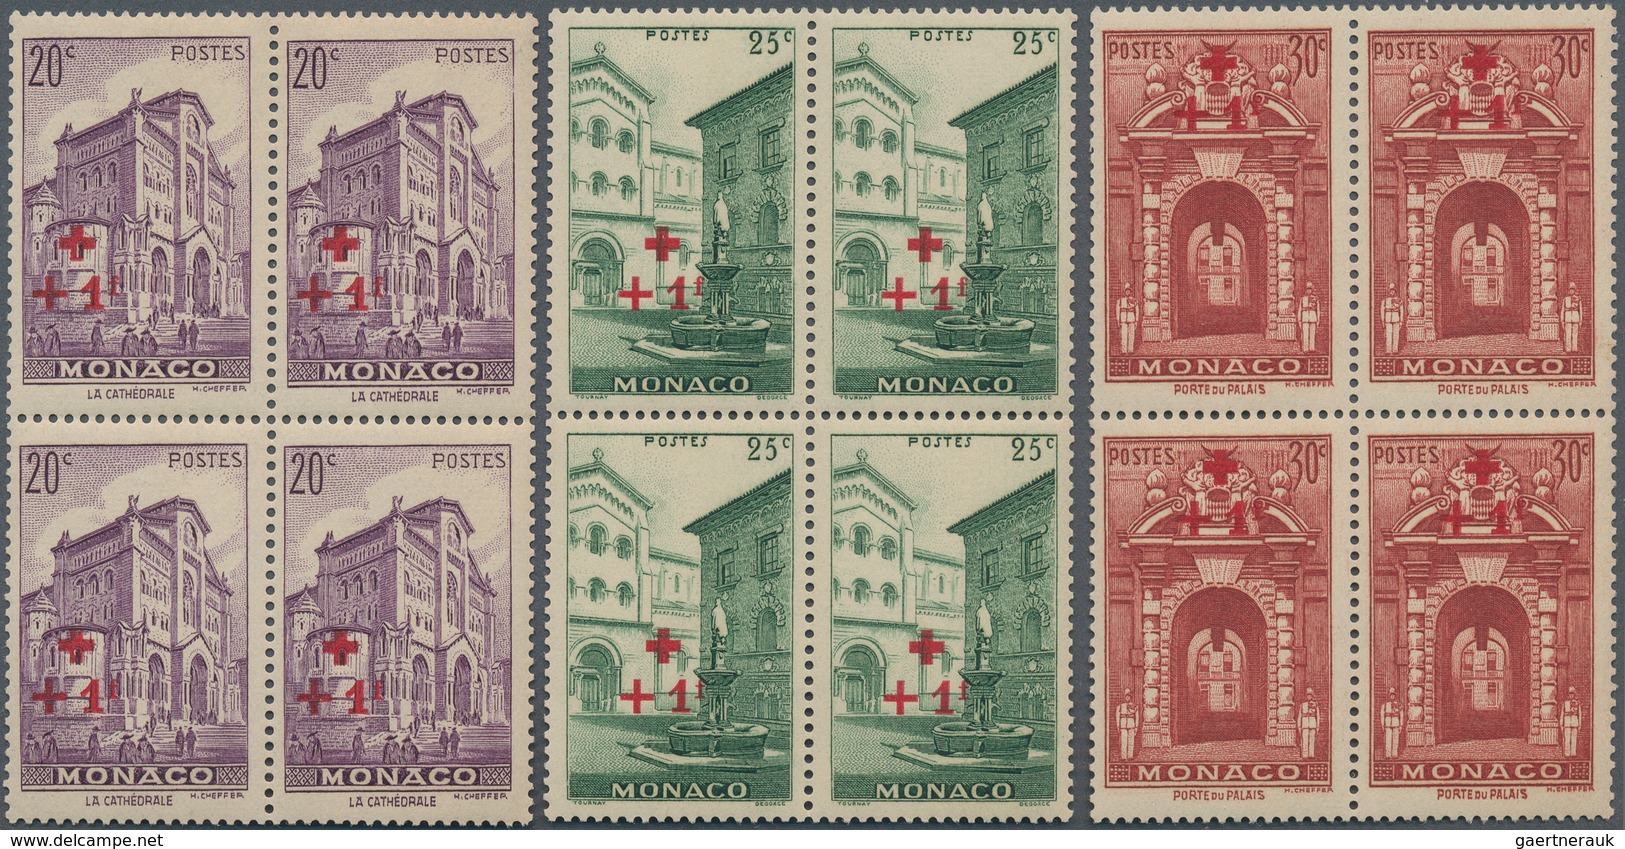 15195 Monaco: 1940, Rotes Kreuz Freimarken, kpl. postfr. Luxusviererblocksatz. (Yvert 1.640,-?)